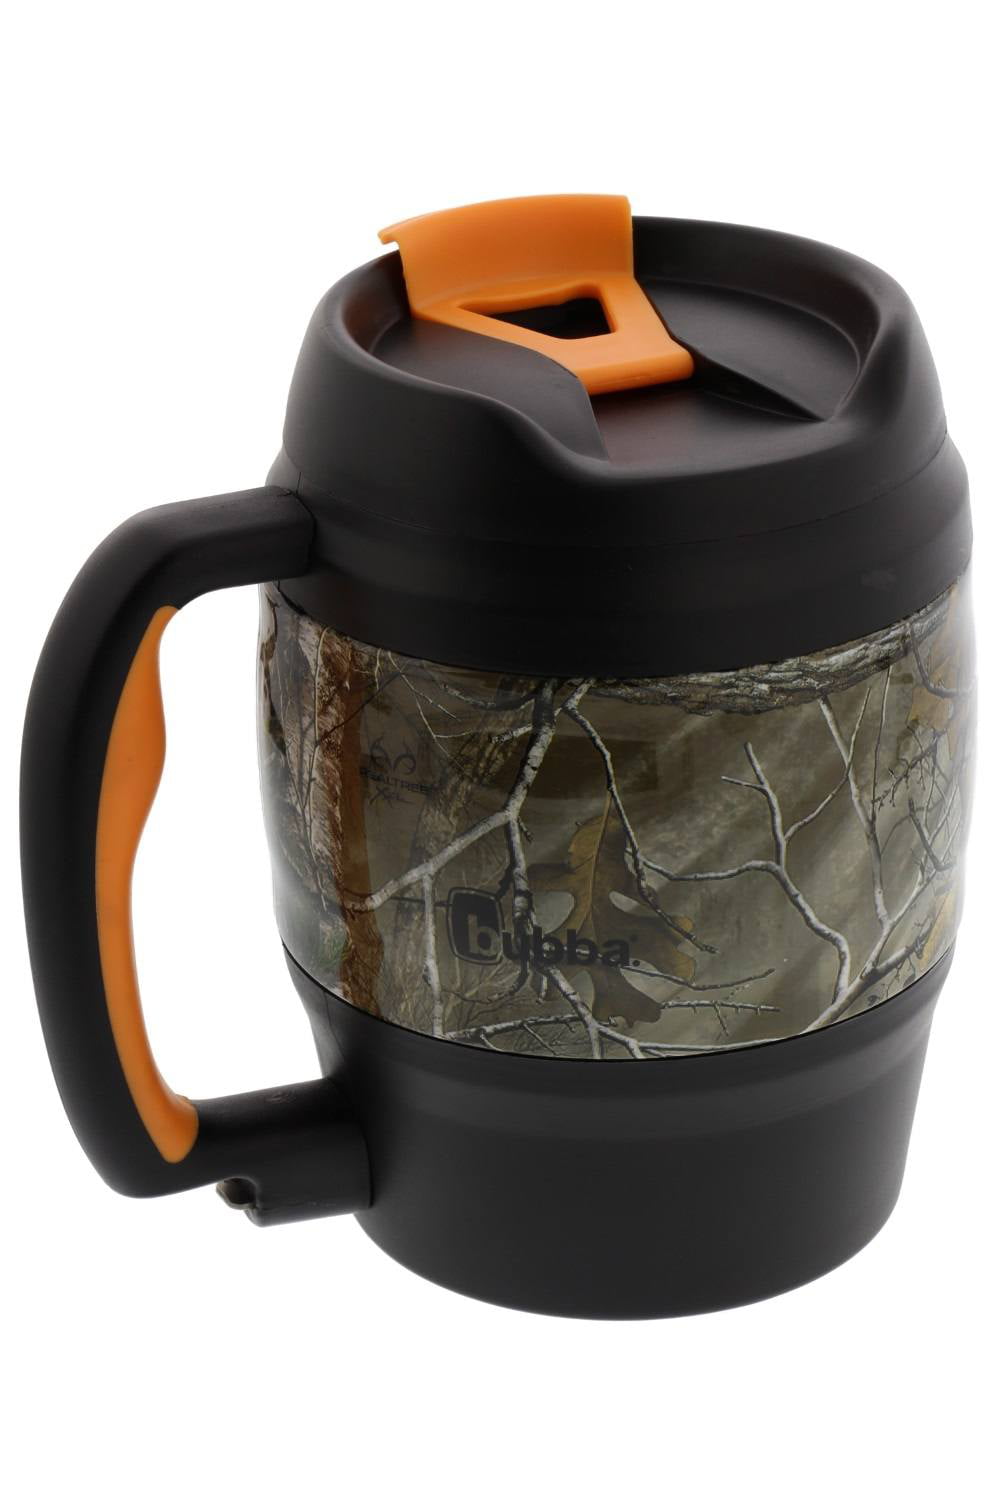 BUBBA Classic Insulated Mug 52oz Travel Coffee Gray/Chrome Keg And Keg Lot  READ